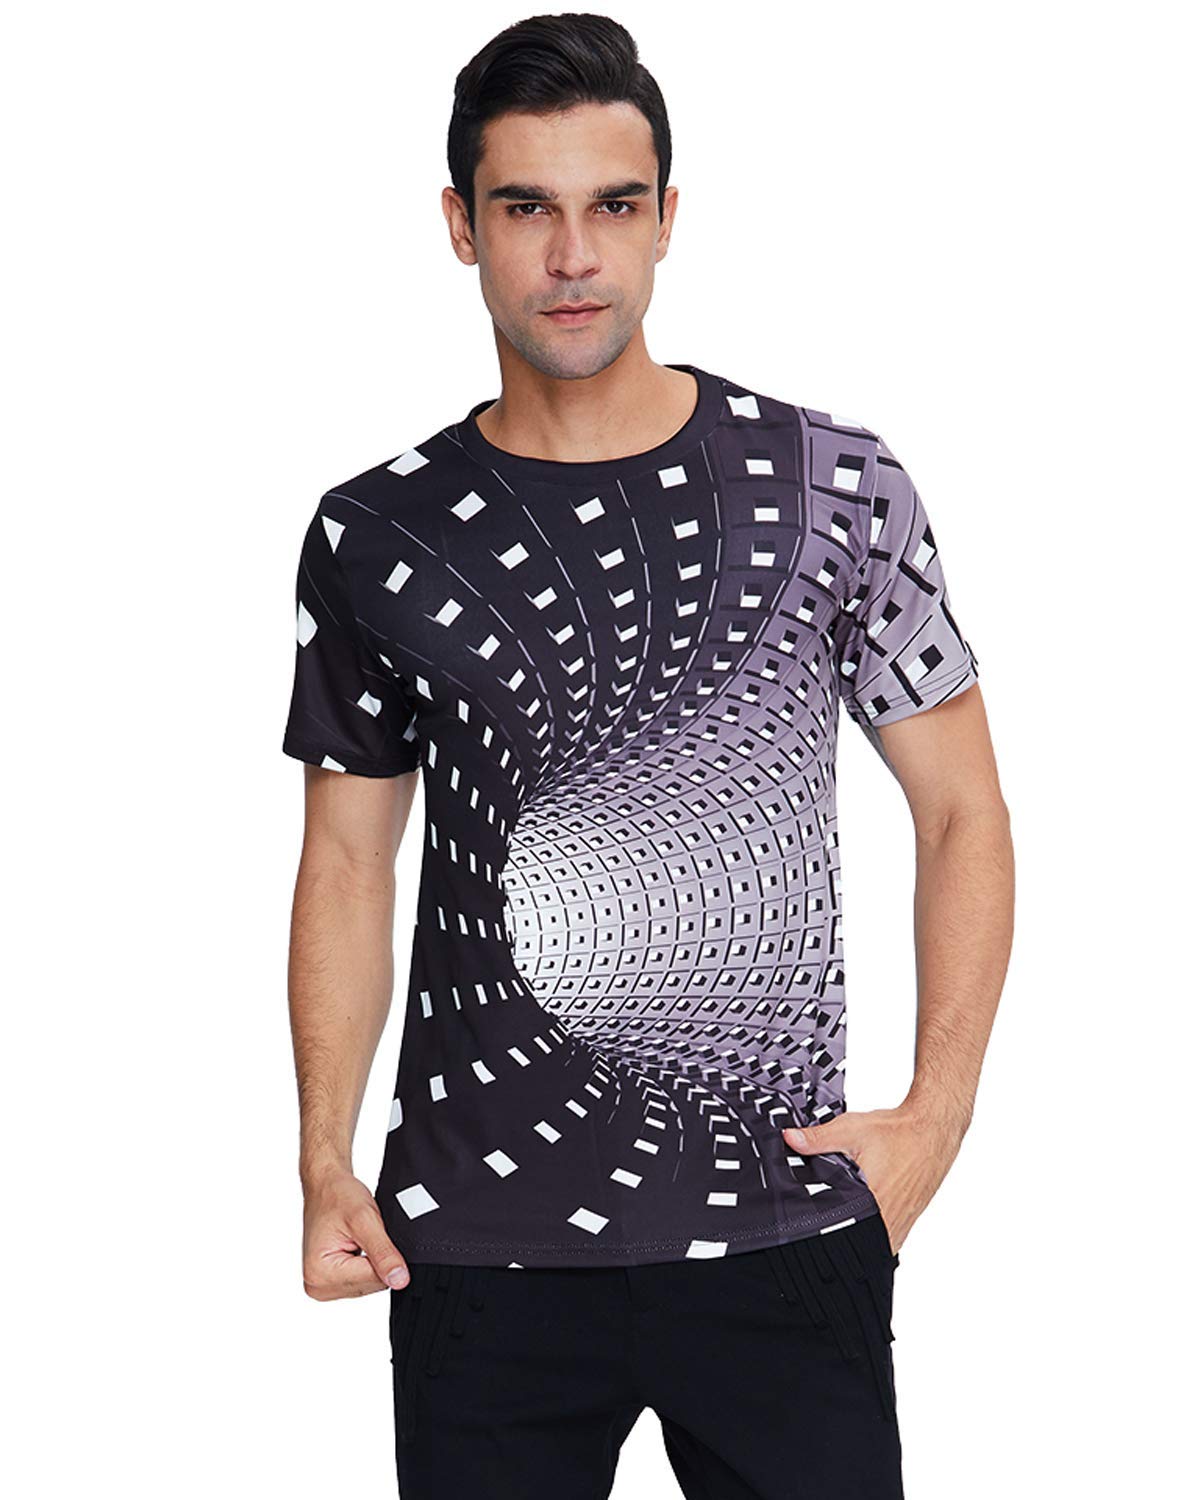 Fanient Unisex Fashion 3D Print T-Shirts Funny Graphics Pattern Crewneck Short Sleeve Tees for Mens Womens